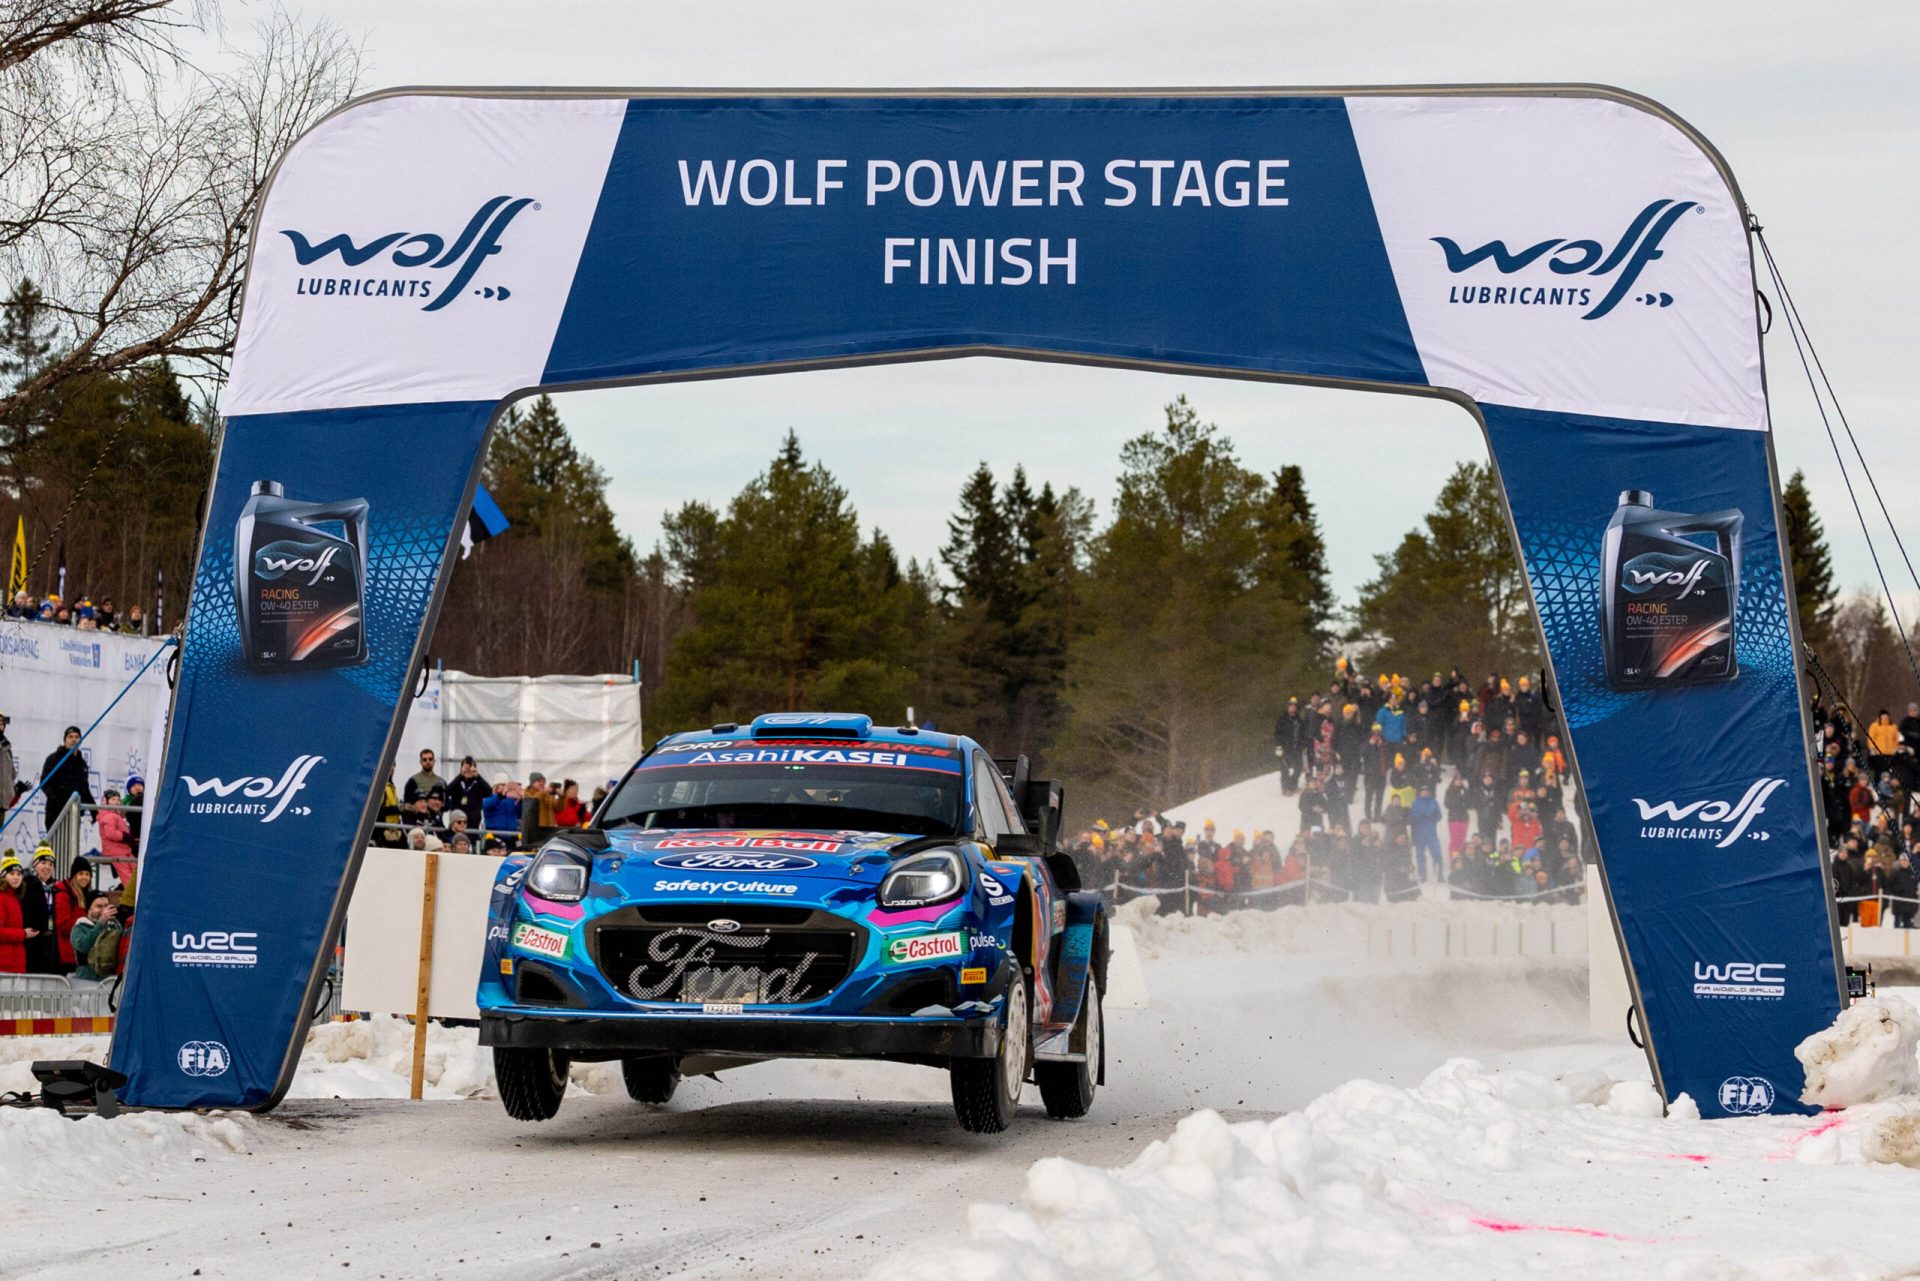 Driving Forward: Wolf Lubricants and WRC Reaffirm Dynamic Partnership